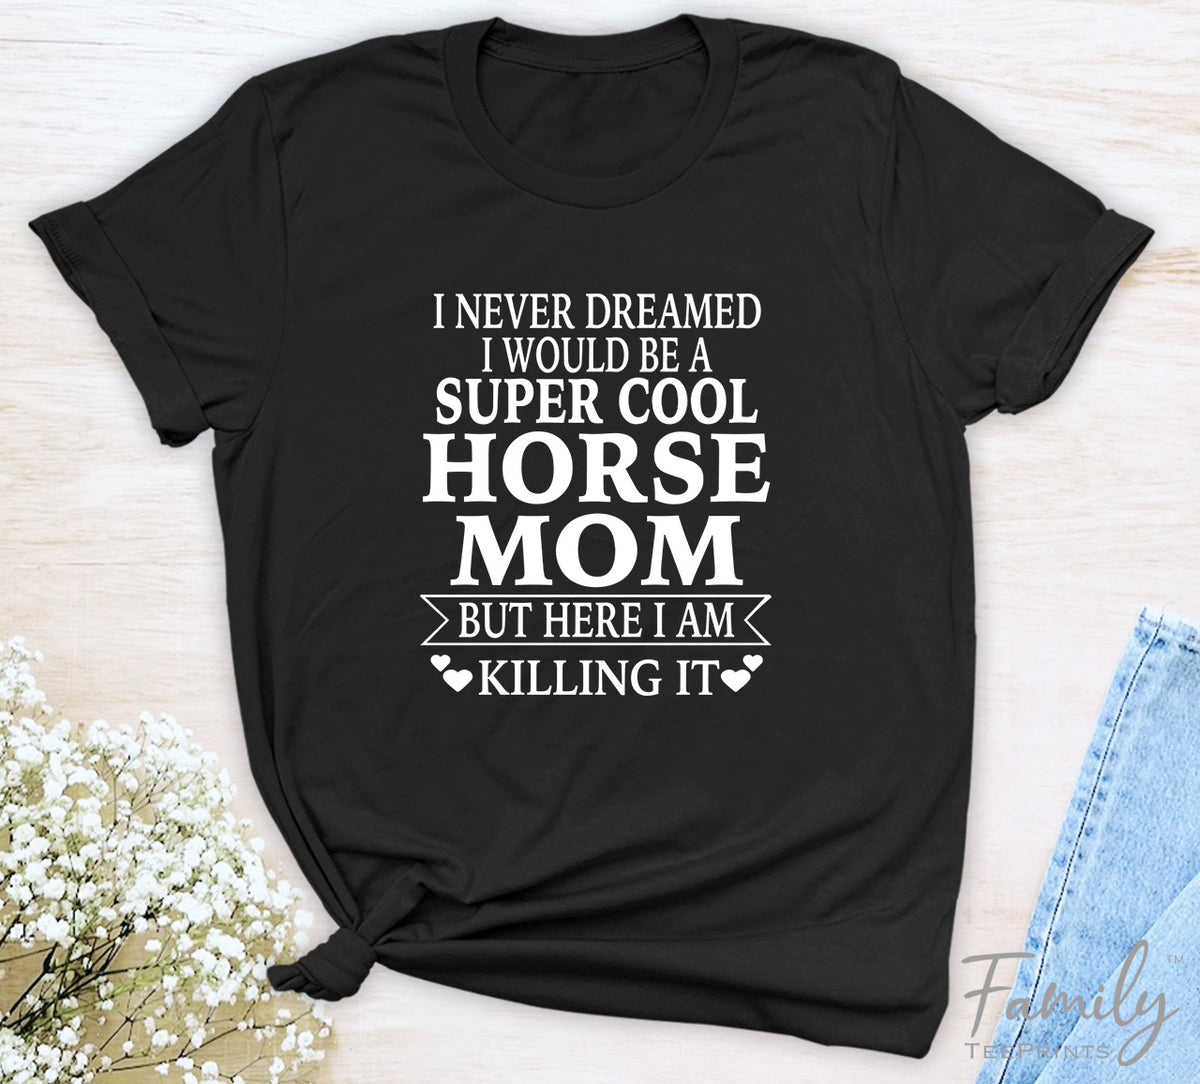 I Never Dreamed I'd Be A Super Cool Horse Mom...- Unisex T-shirt - Horse Mom Shirt - Gift For Horse Mom - familyteeprints